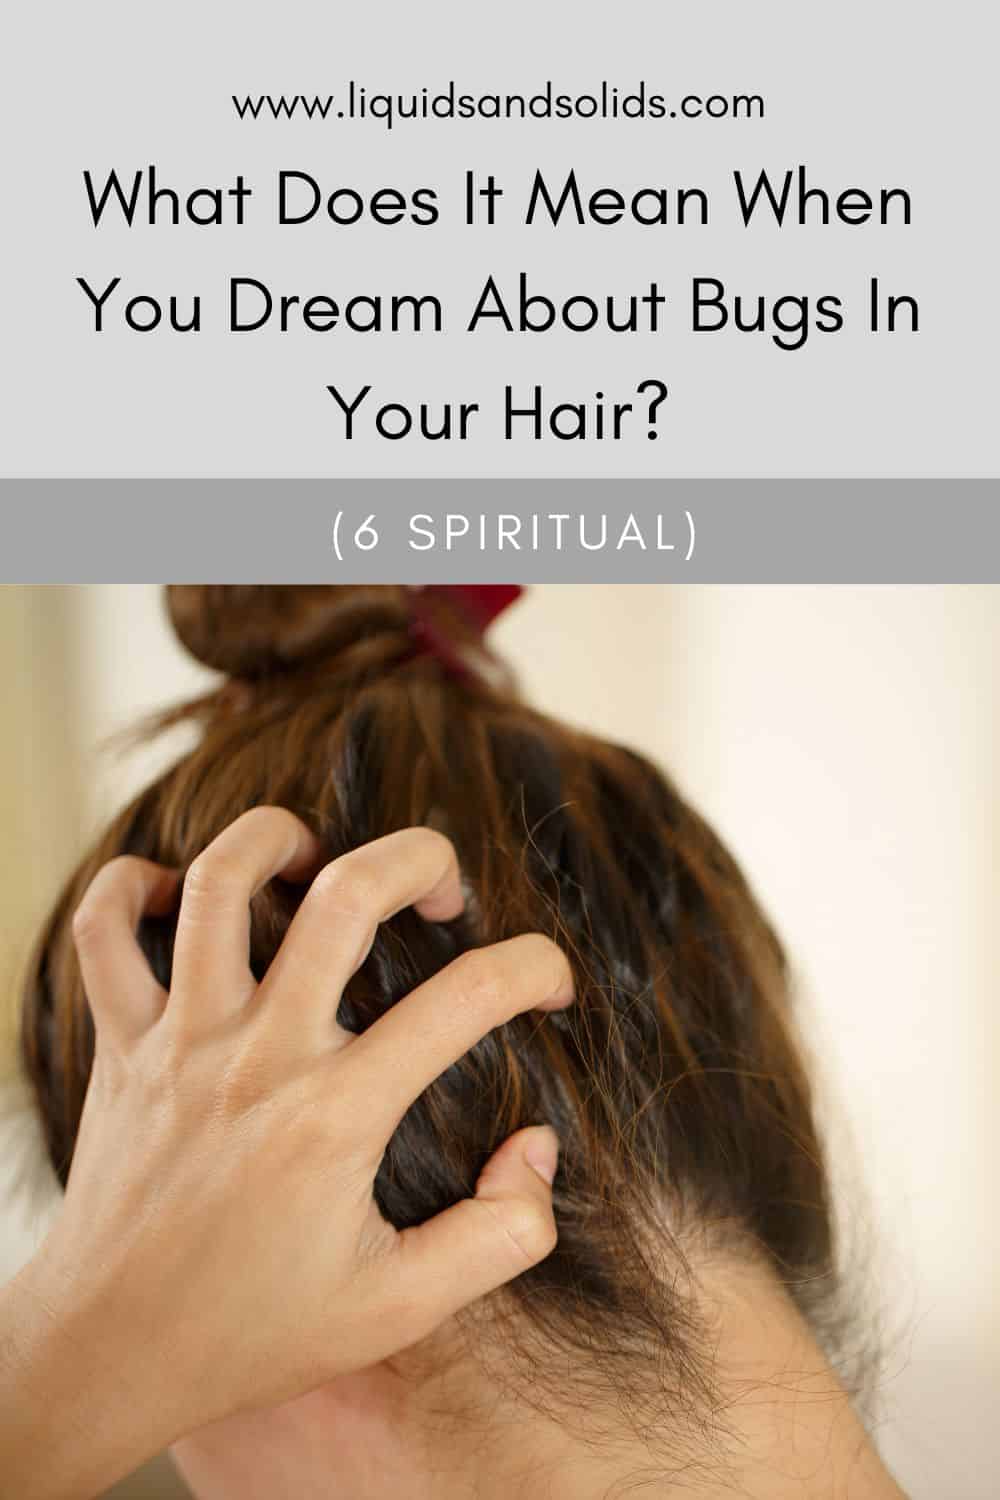  Bugs In Hair Dream (6 andlegar merkingar)